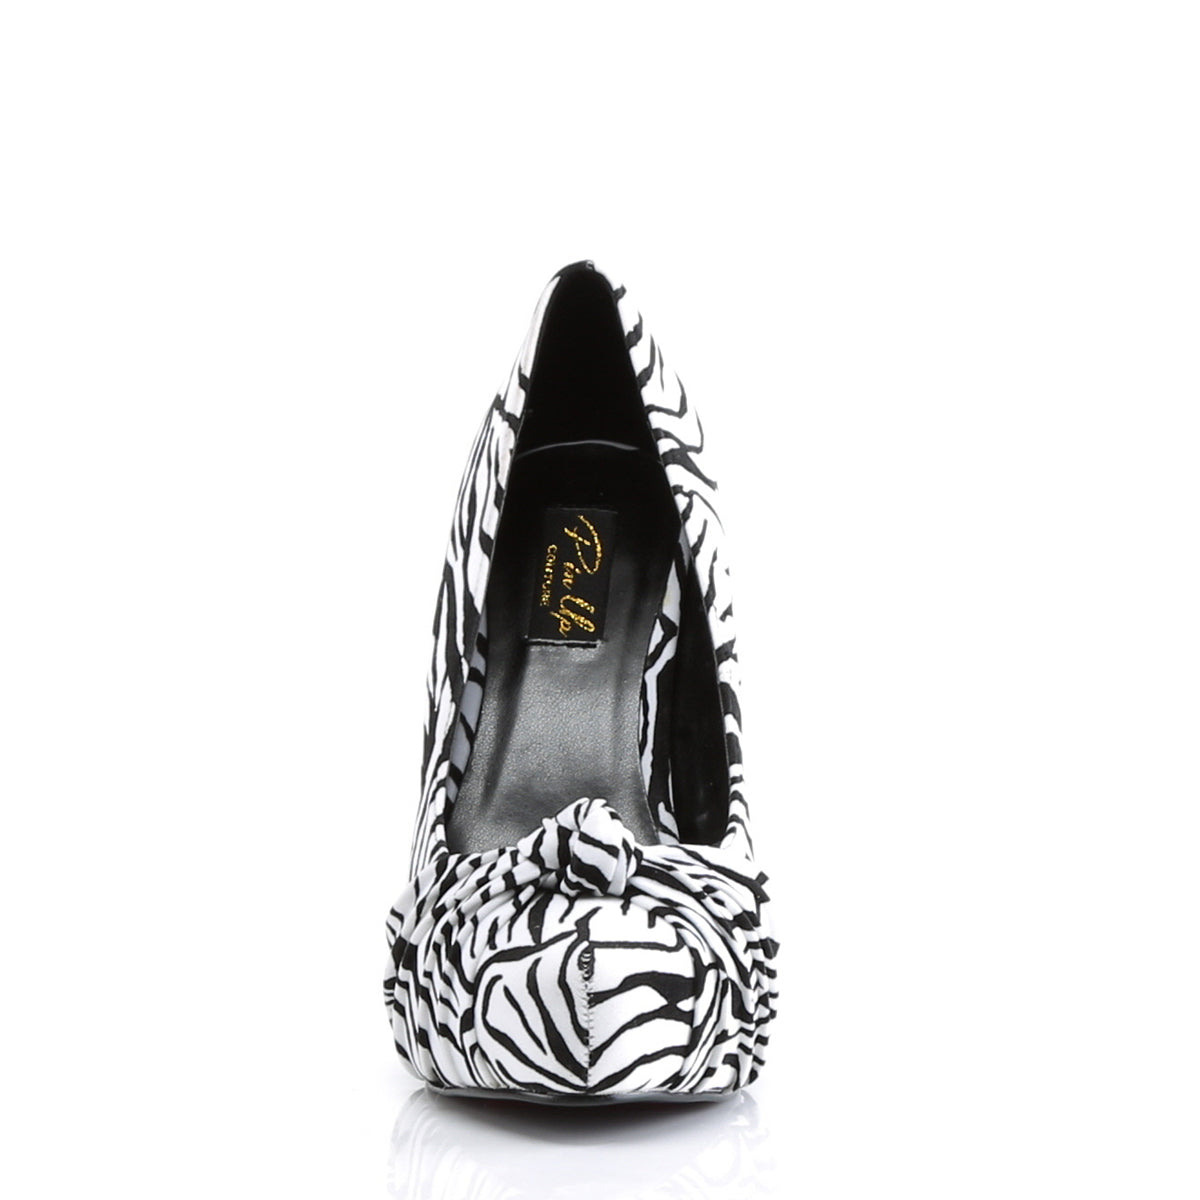 SAFARI-06 Retro Glamour Pin Up Couture Platforms Blk-Wht Zebra Print Velvet